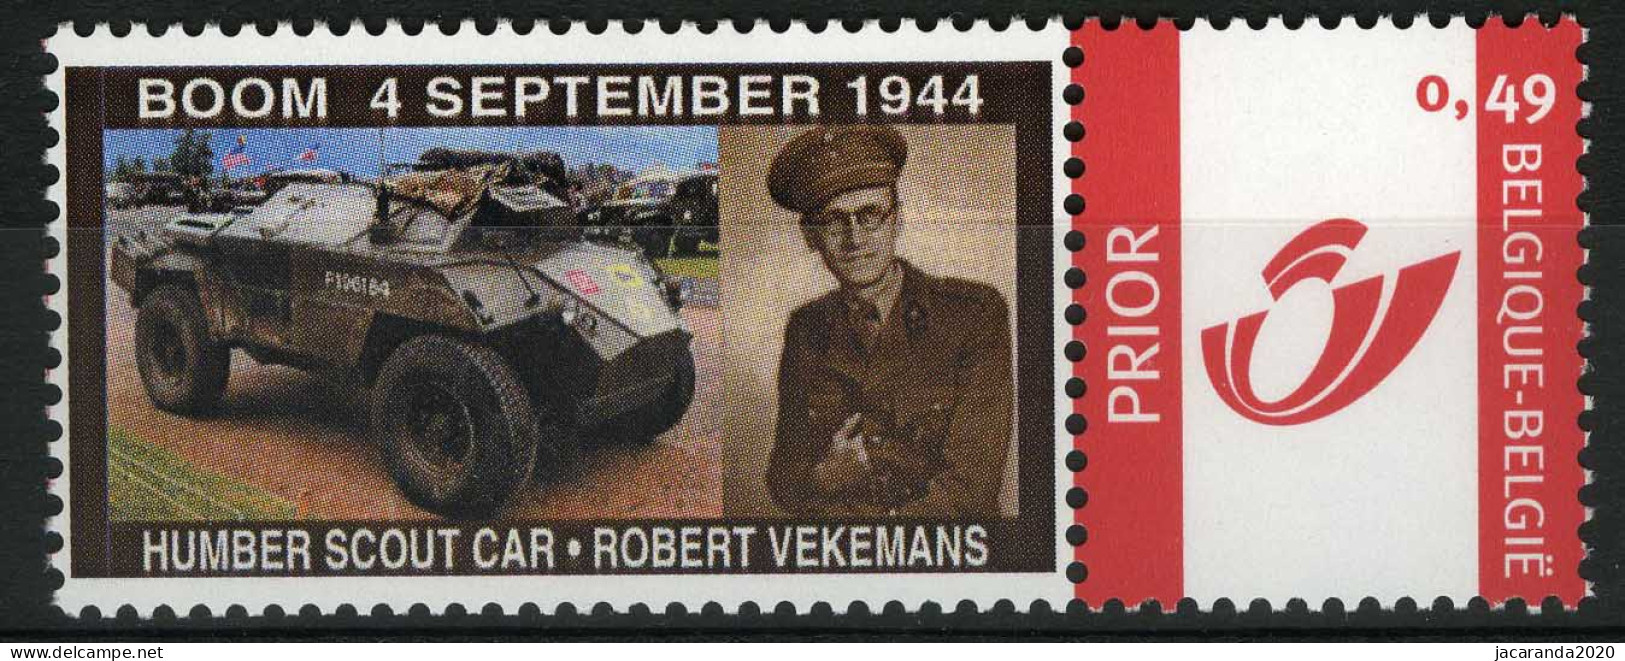 België 3183 - Duostamp - Humber Scout Car - Vekemans - Oorlog - Tank - Boom 4 September 1944 - Mint